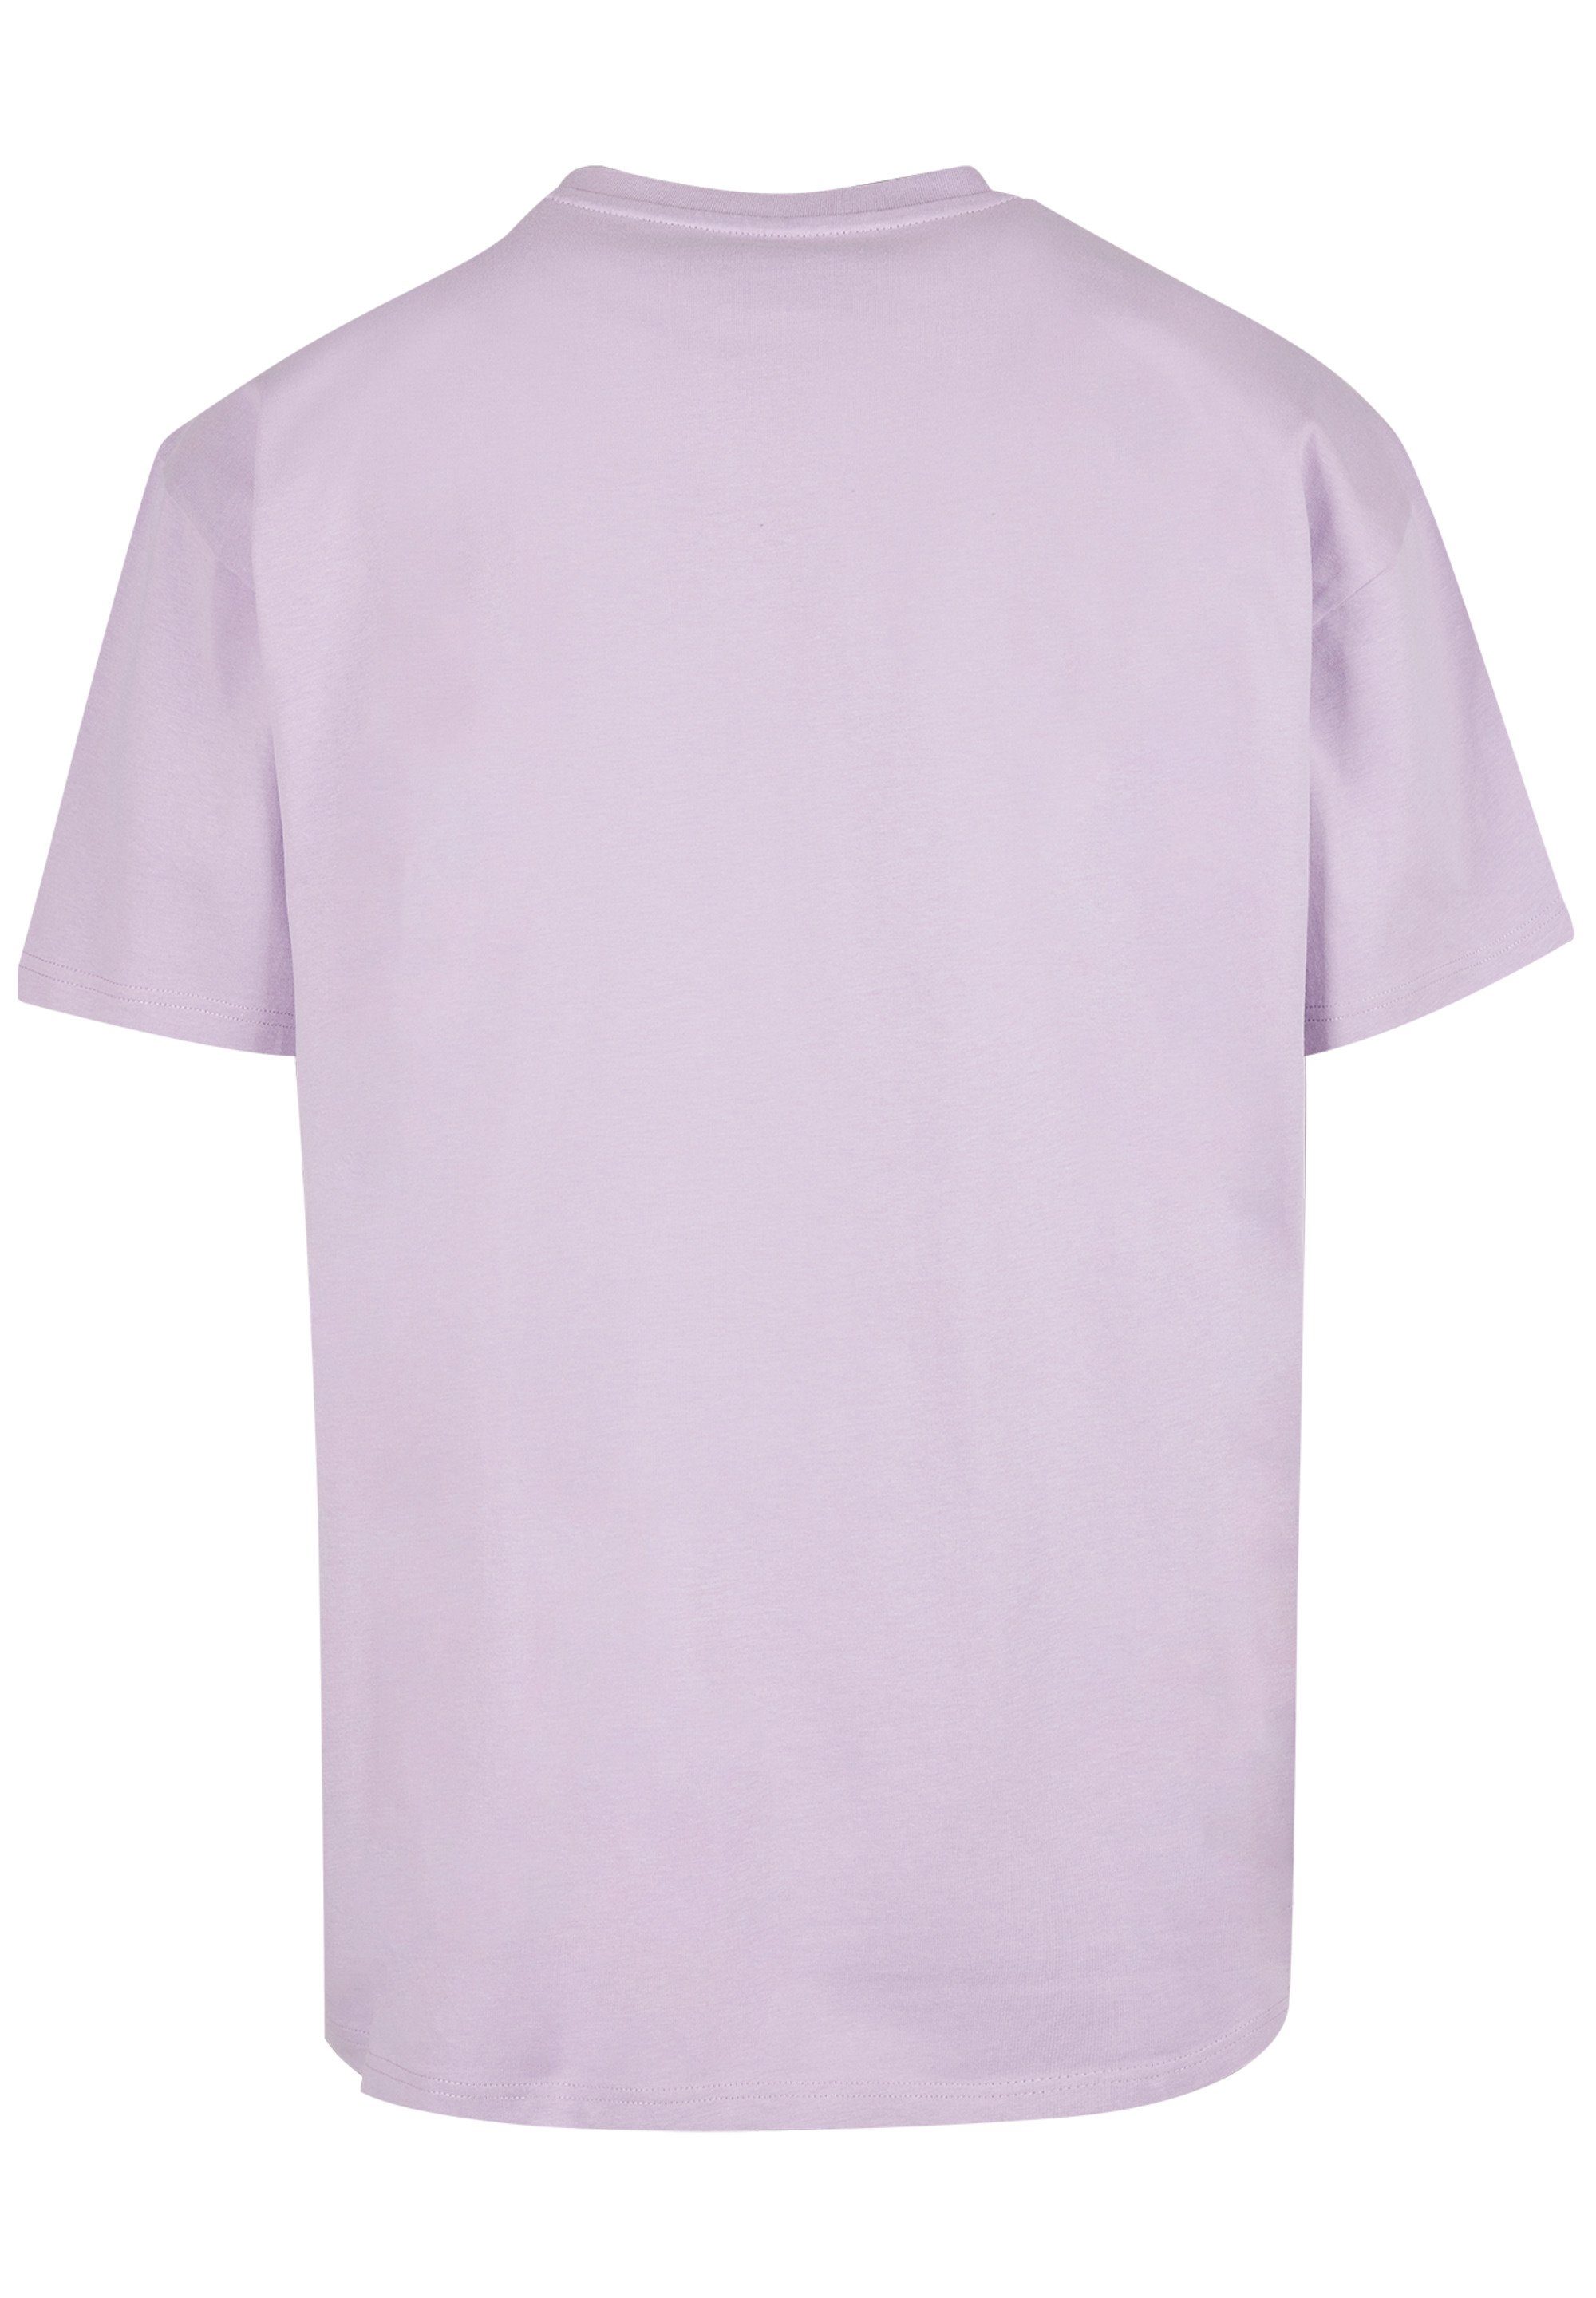 F4NT4STIC T-Shirt Schmetterling Skull TEE lilac Print OVERSIZE